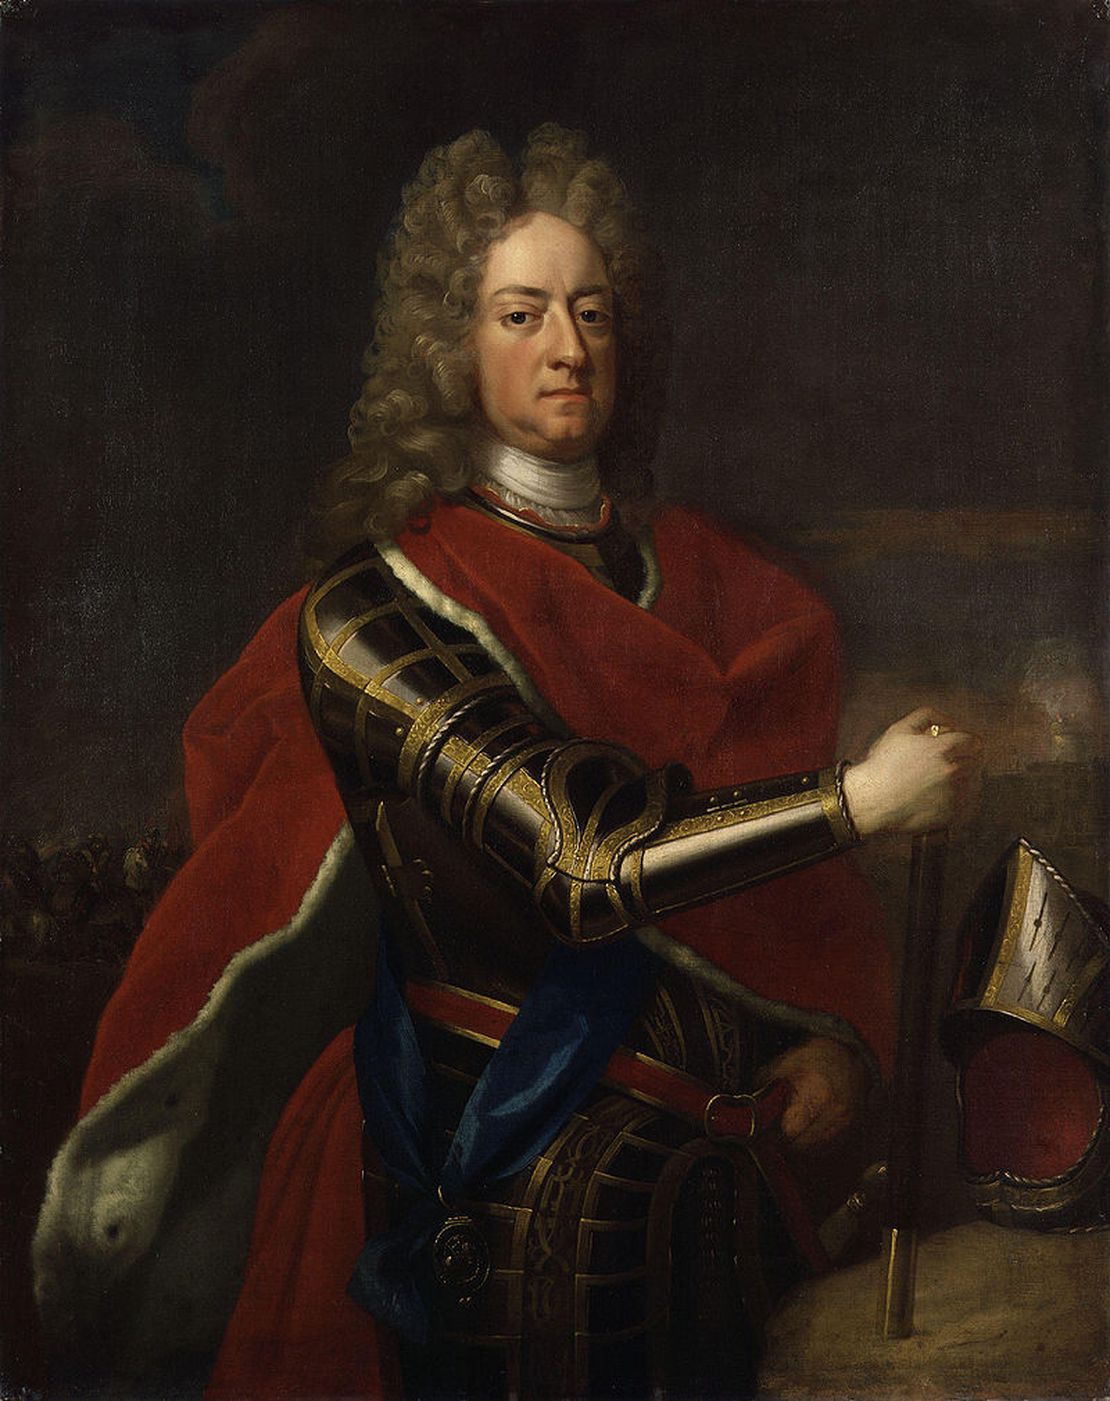 James Butler, 2nd Duke of Ormonde and an ancestor of Princess Diana, born